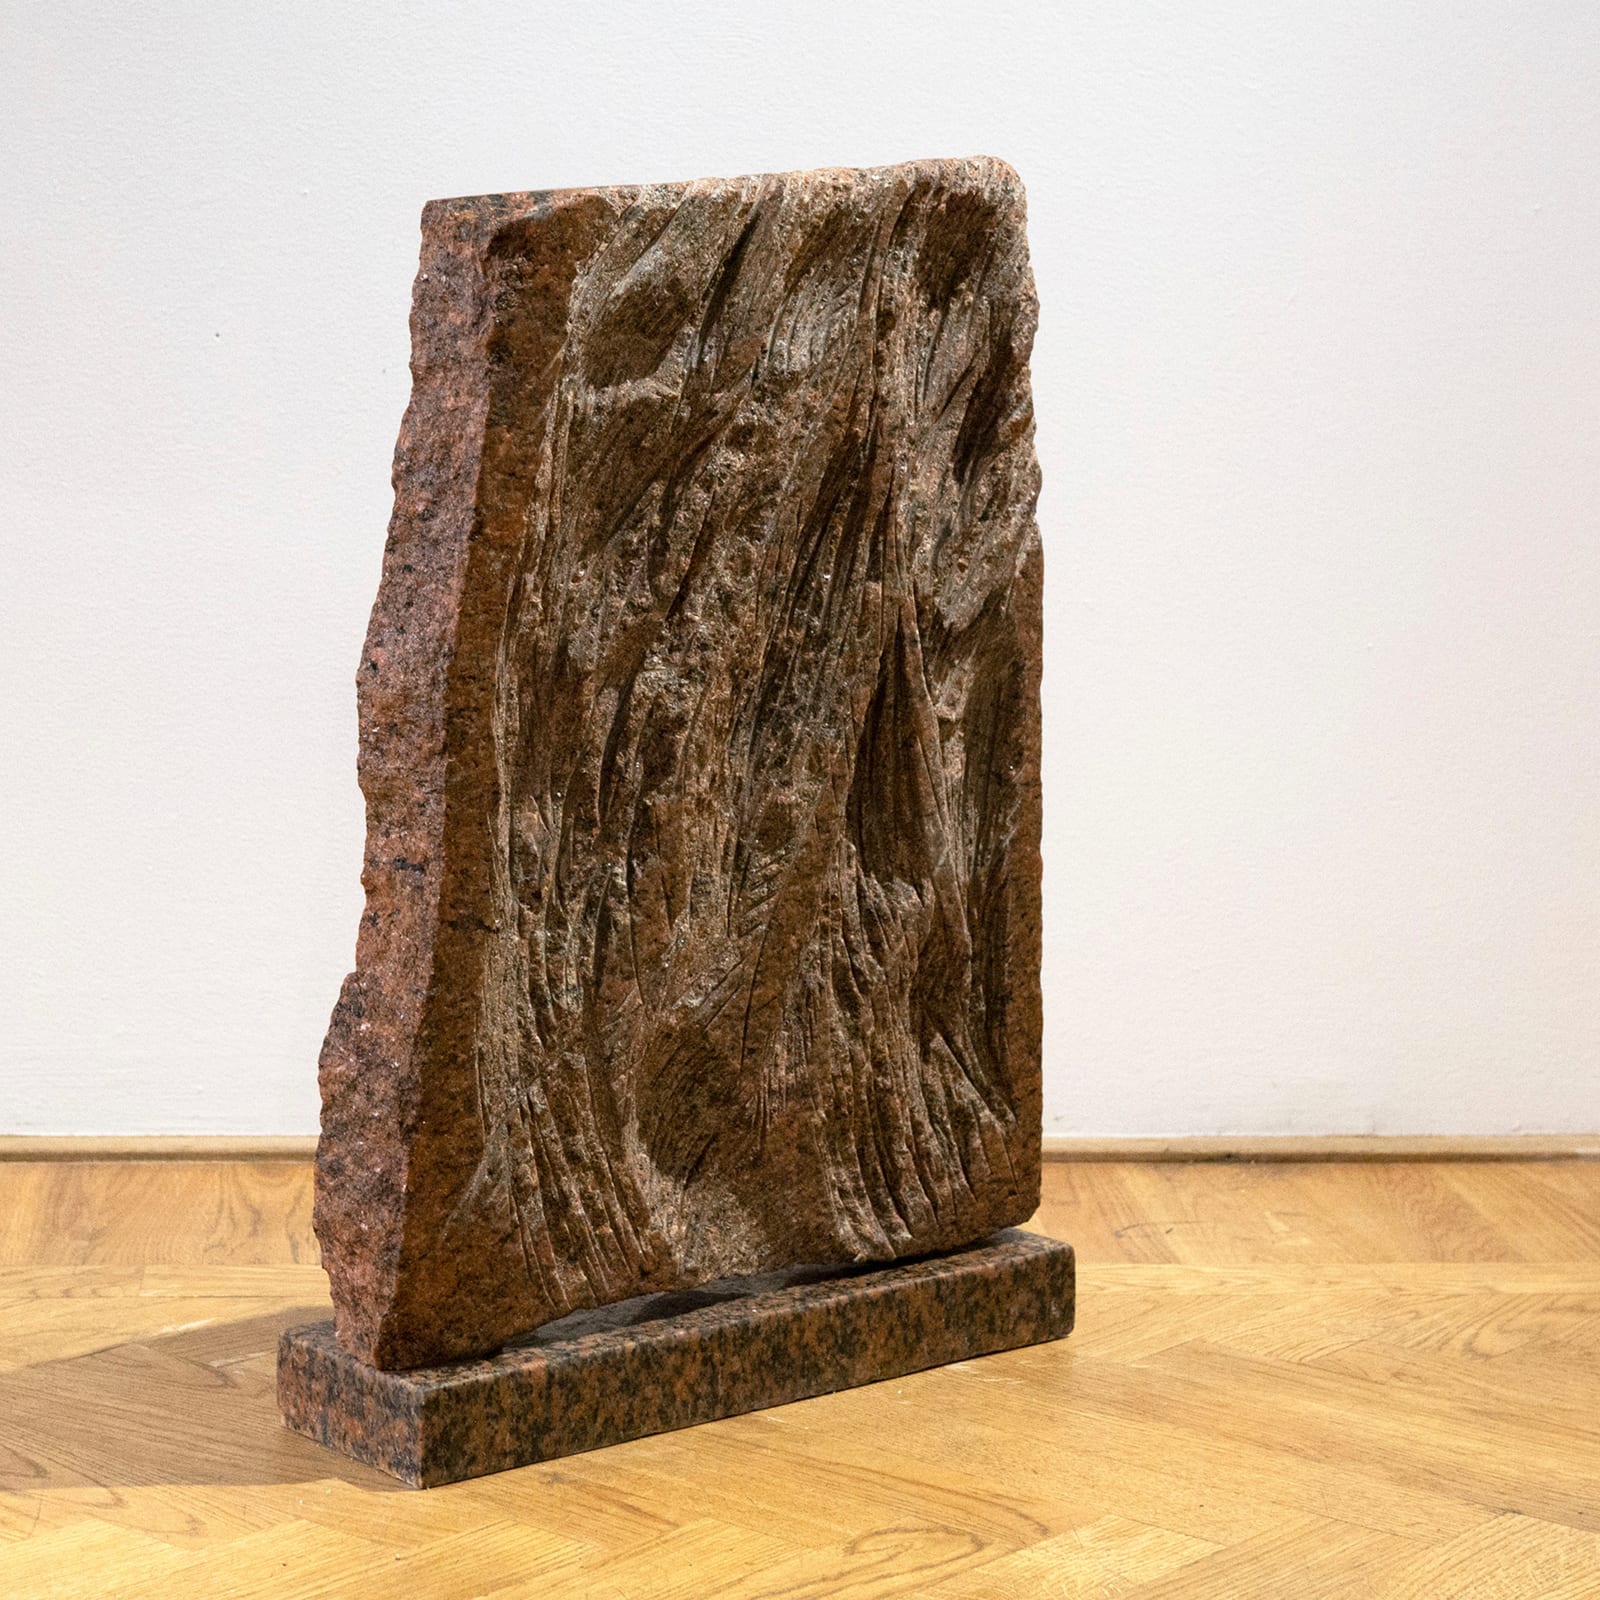 Jordana Loeb, Granito Di Seta (Granite in silk), 2021